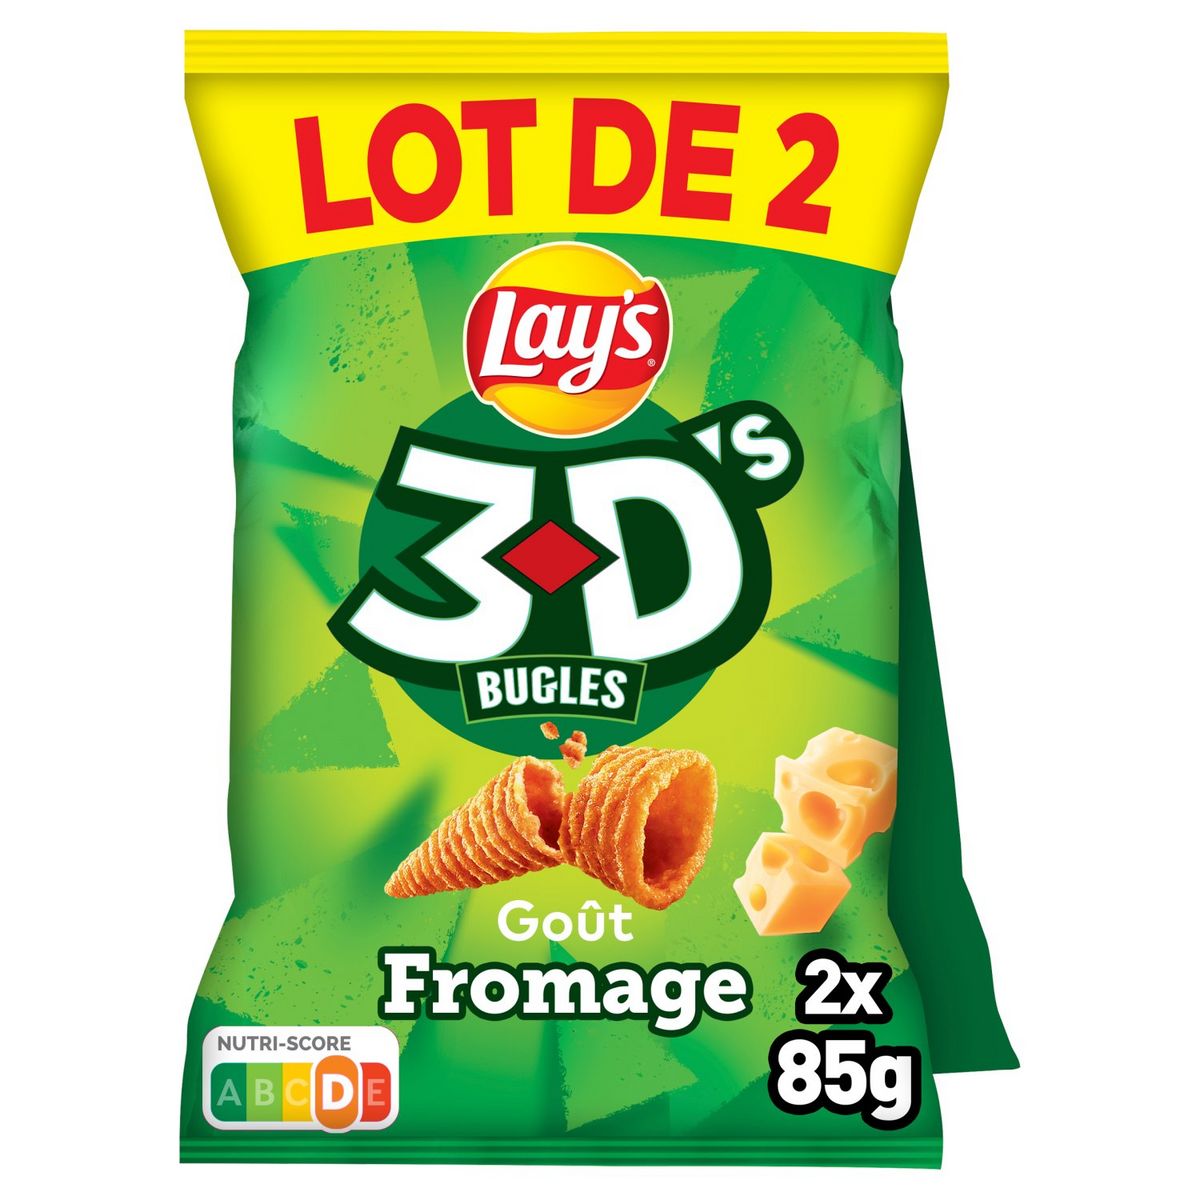 LAY'S Biscuits soufflés 3D's bugles goût fromage lot de 2 2x85g